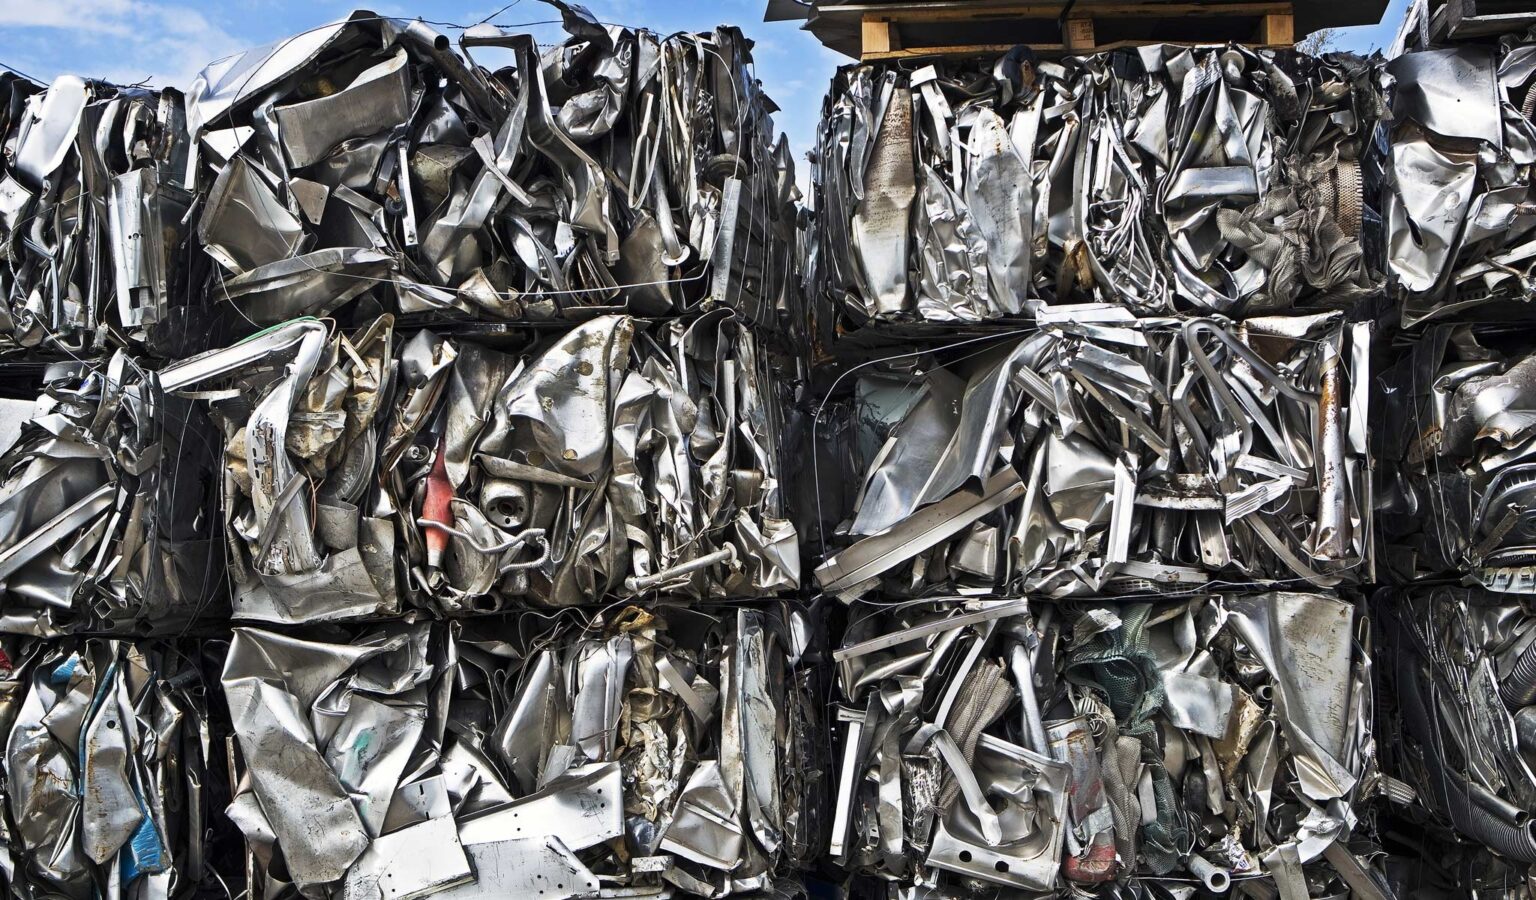 A scrap metal yard. South Africa’s energy sector is suffering from vandalism by scrap metal dealers. www.theexchange.africa